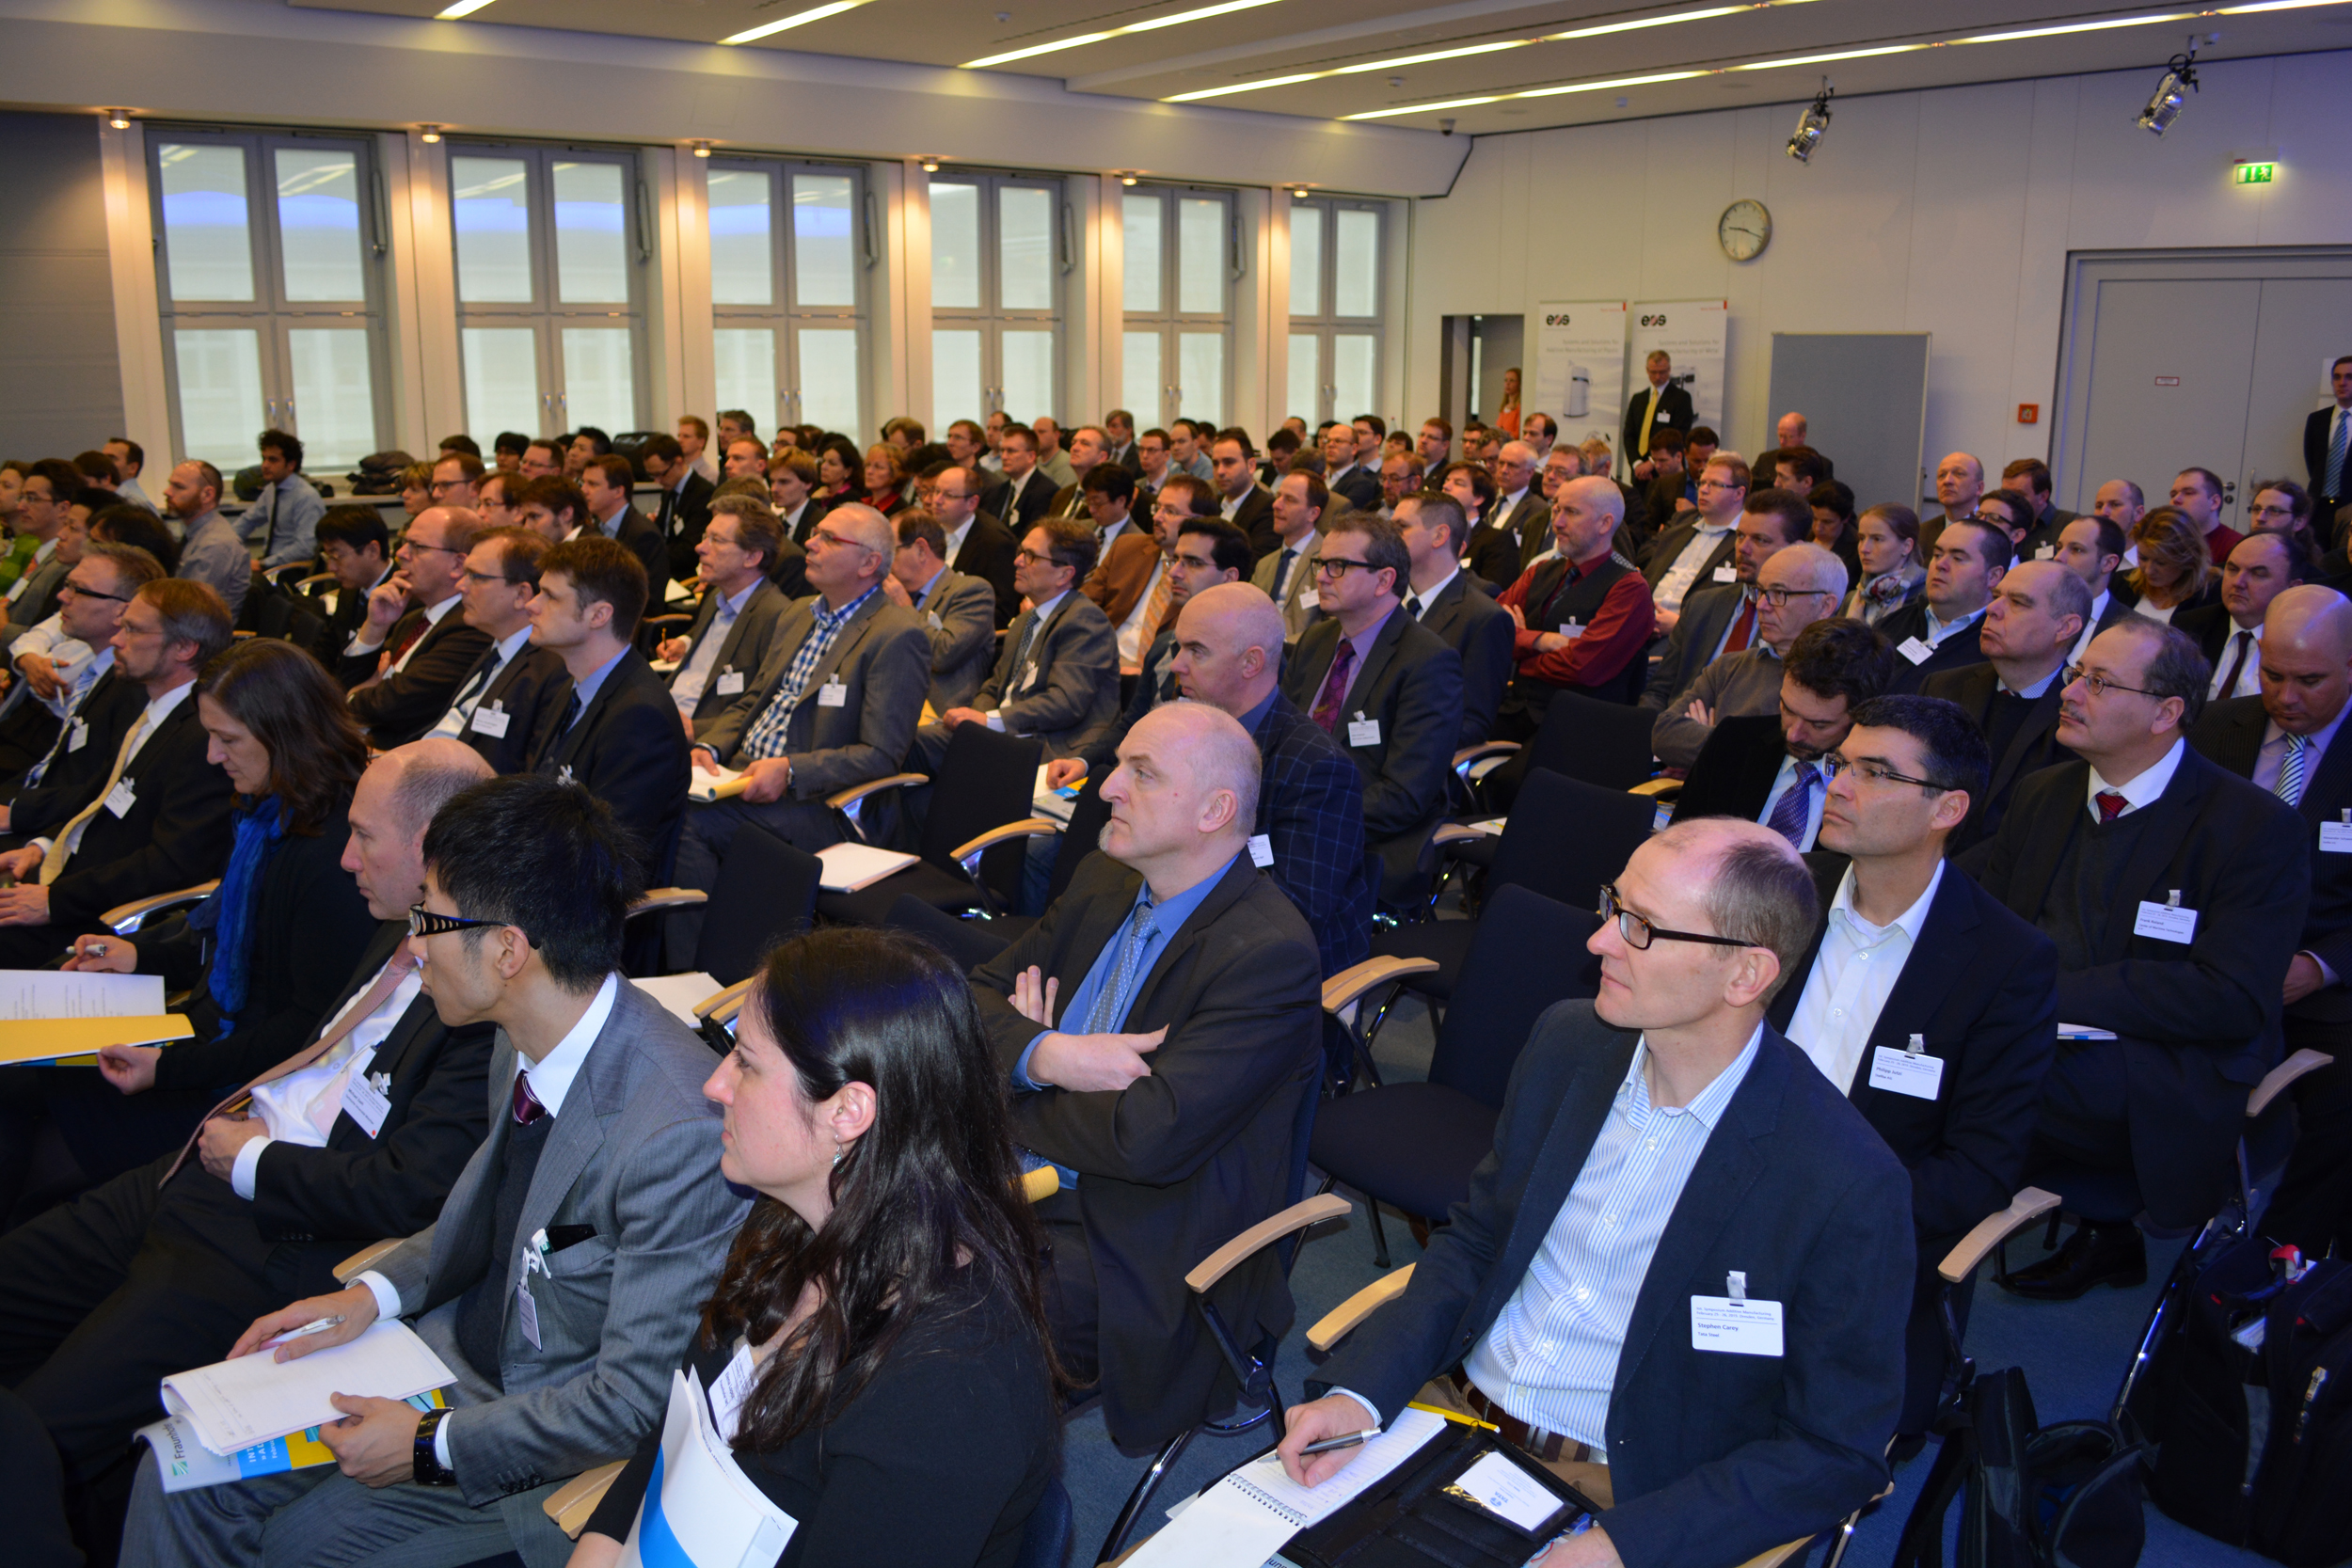 International Symposium "Additive Manufacturing" am 25.-26. Februar 2015 in Dresden